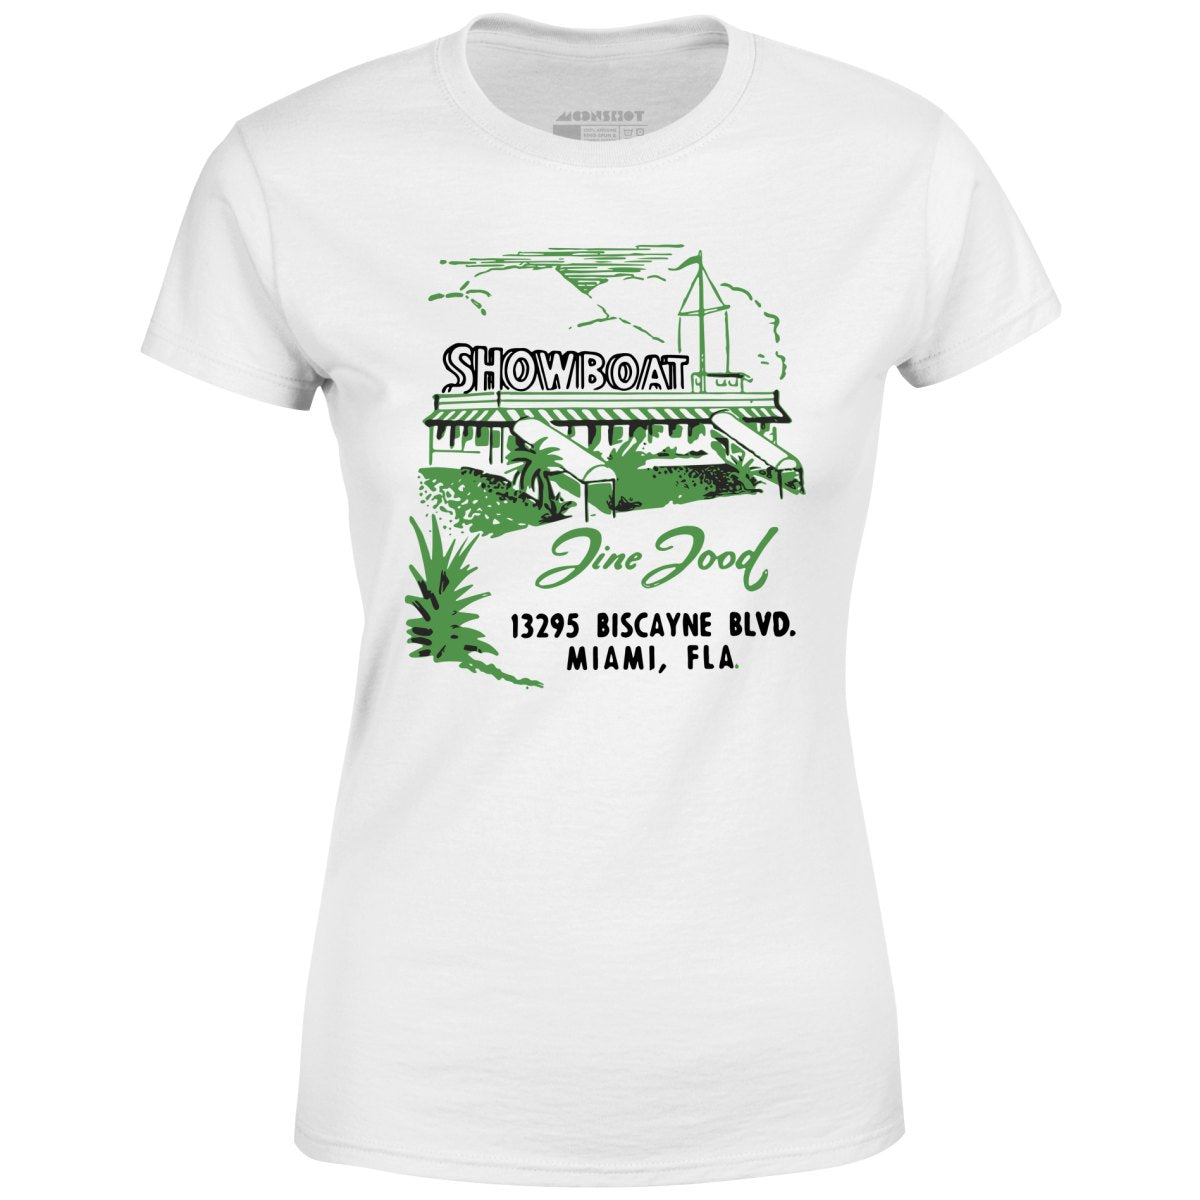 Showboat - Miami, FL - Vintage Restaurant - Women's T-Shirt